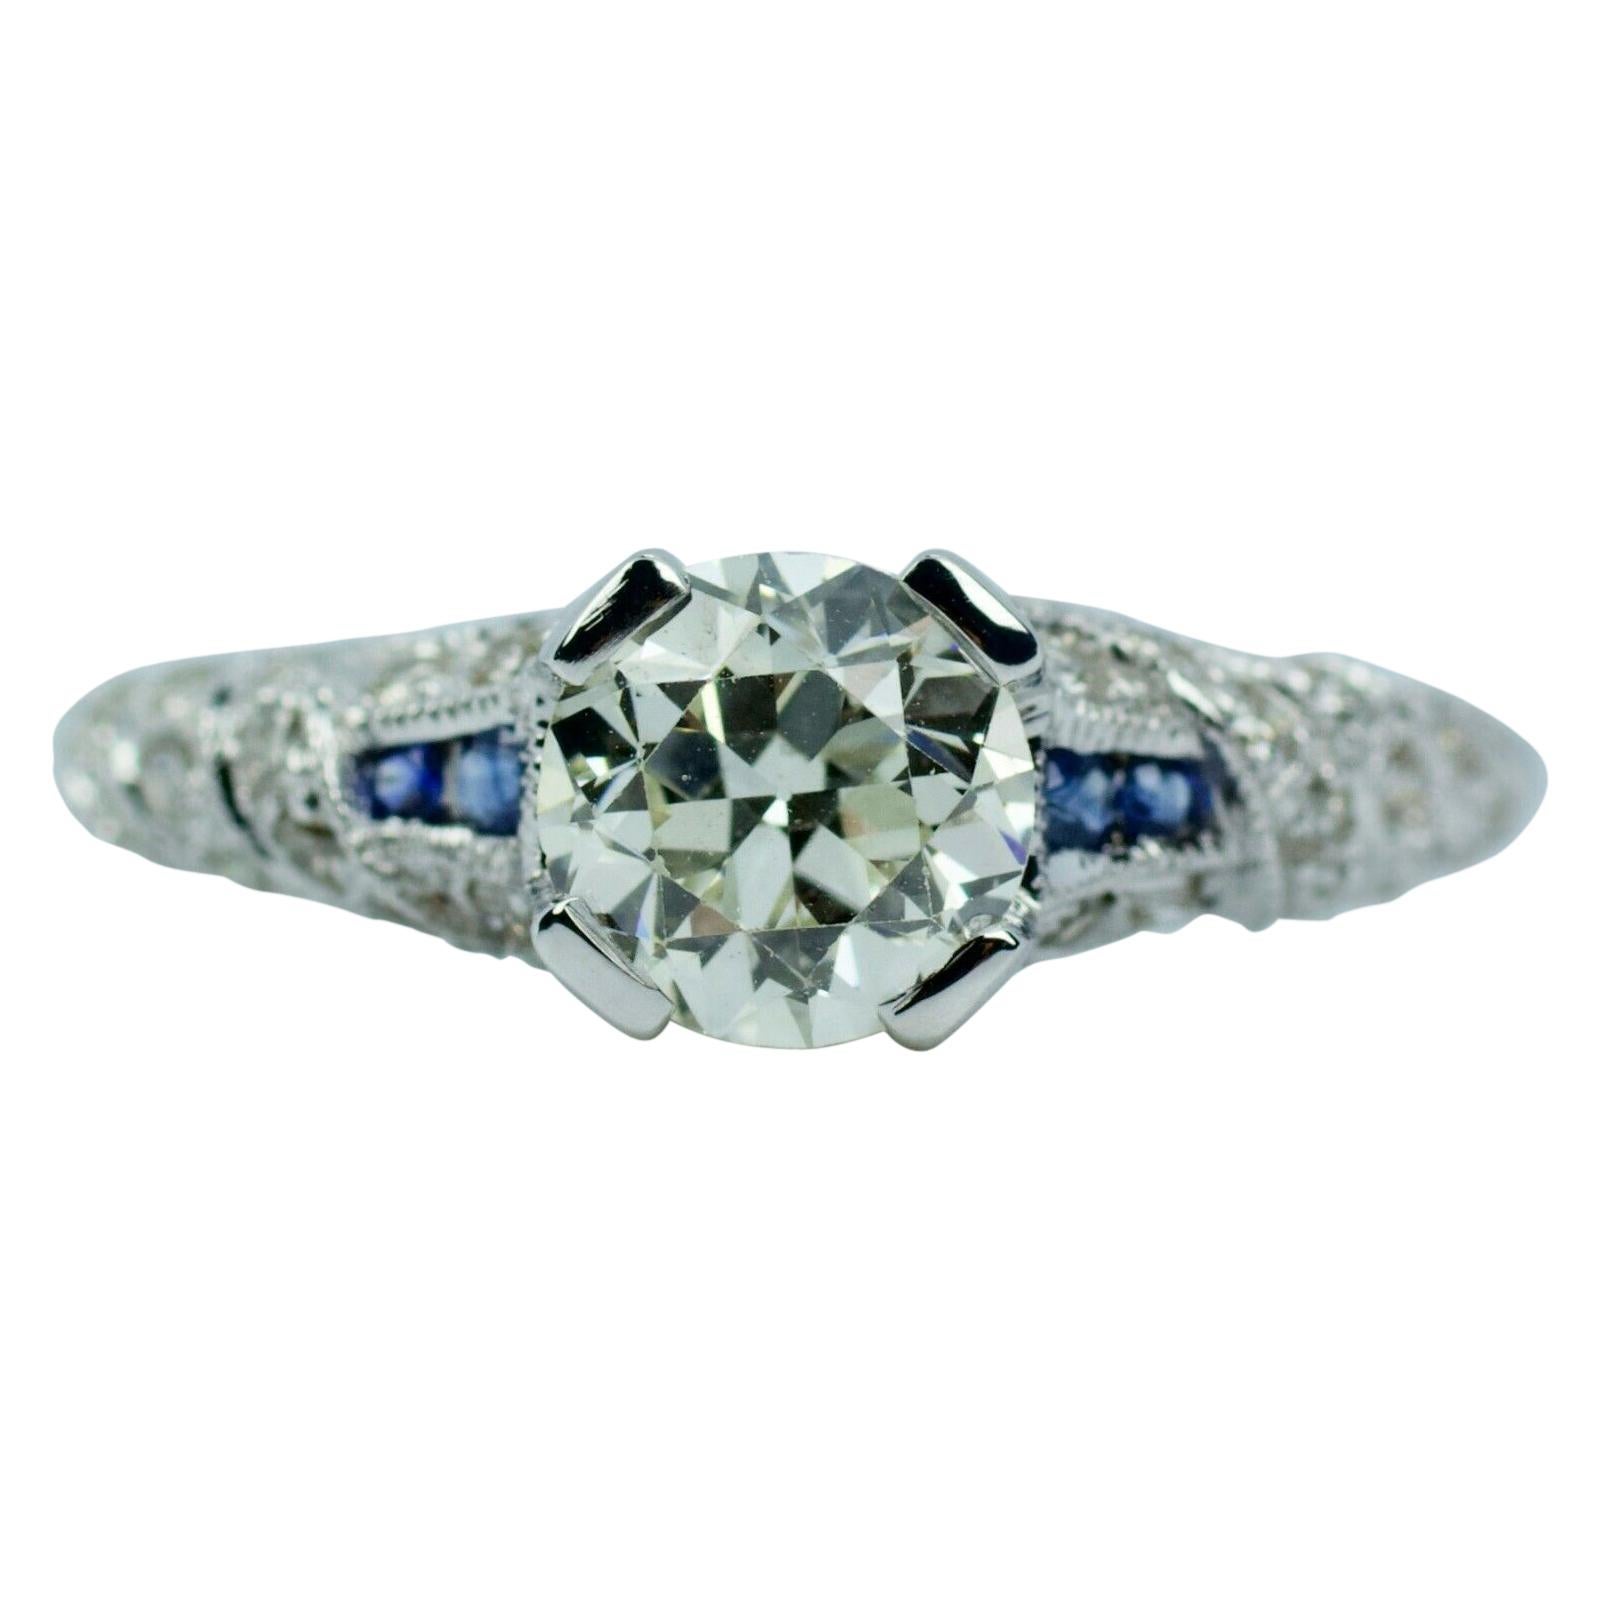 Vintage 14k White Gold European Cut Center W/ Sapphire & Single Cut Diamond Ring